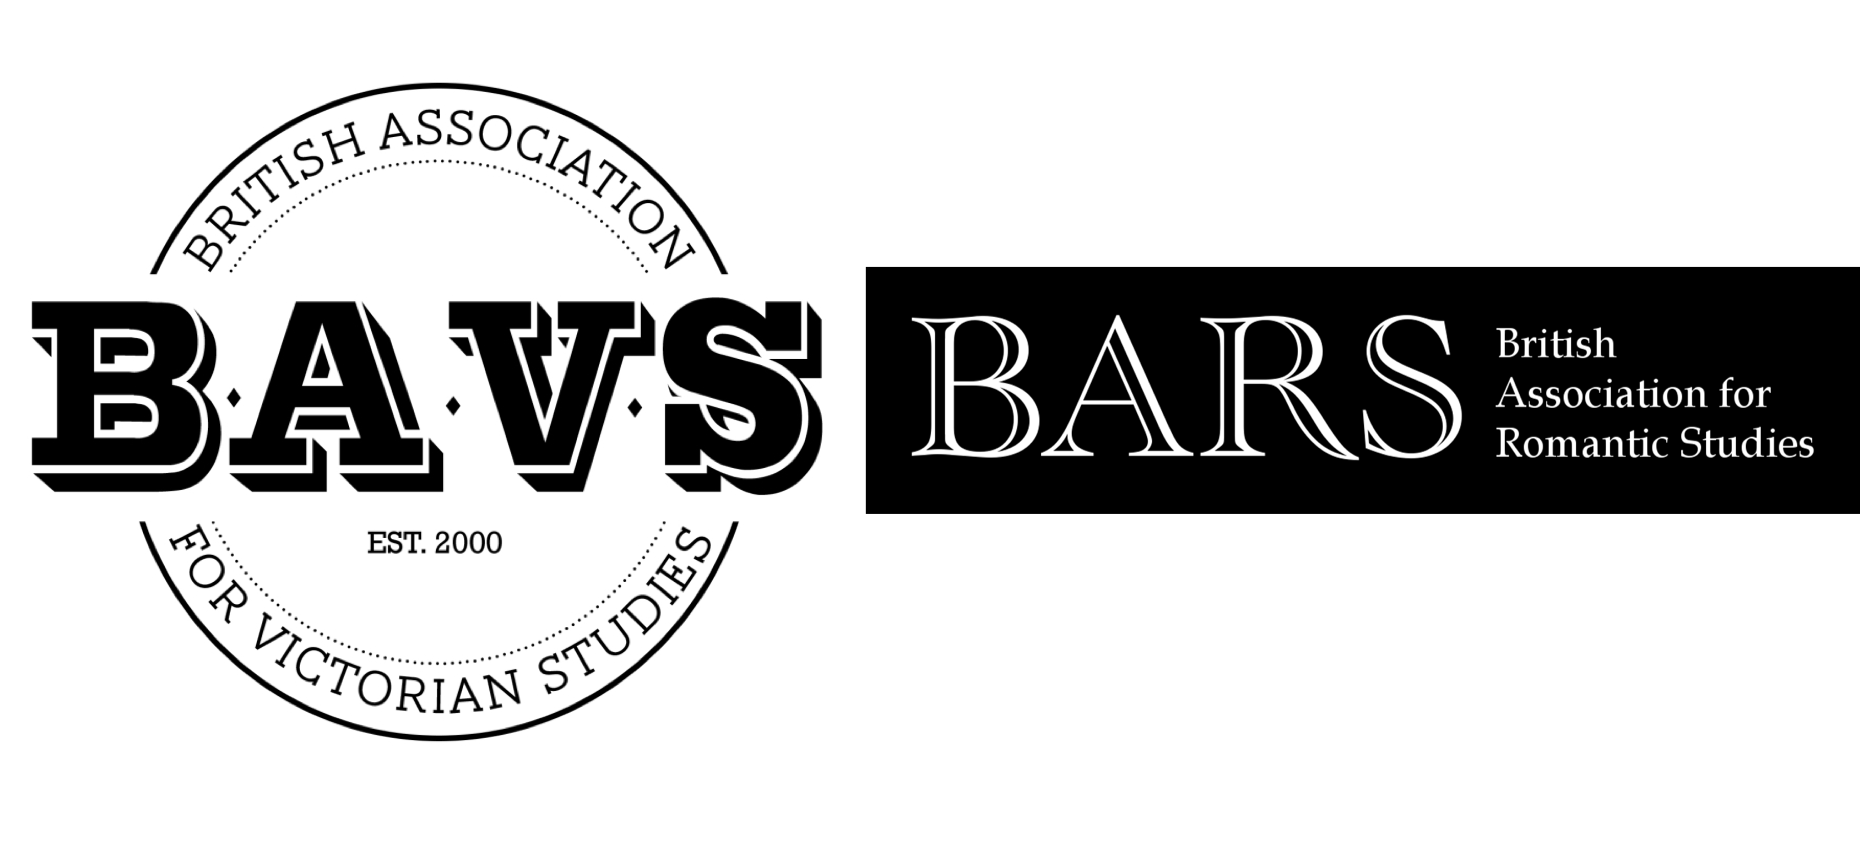 BAVS and BARS logos